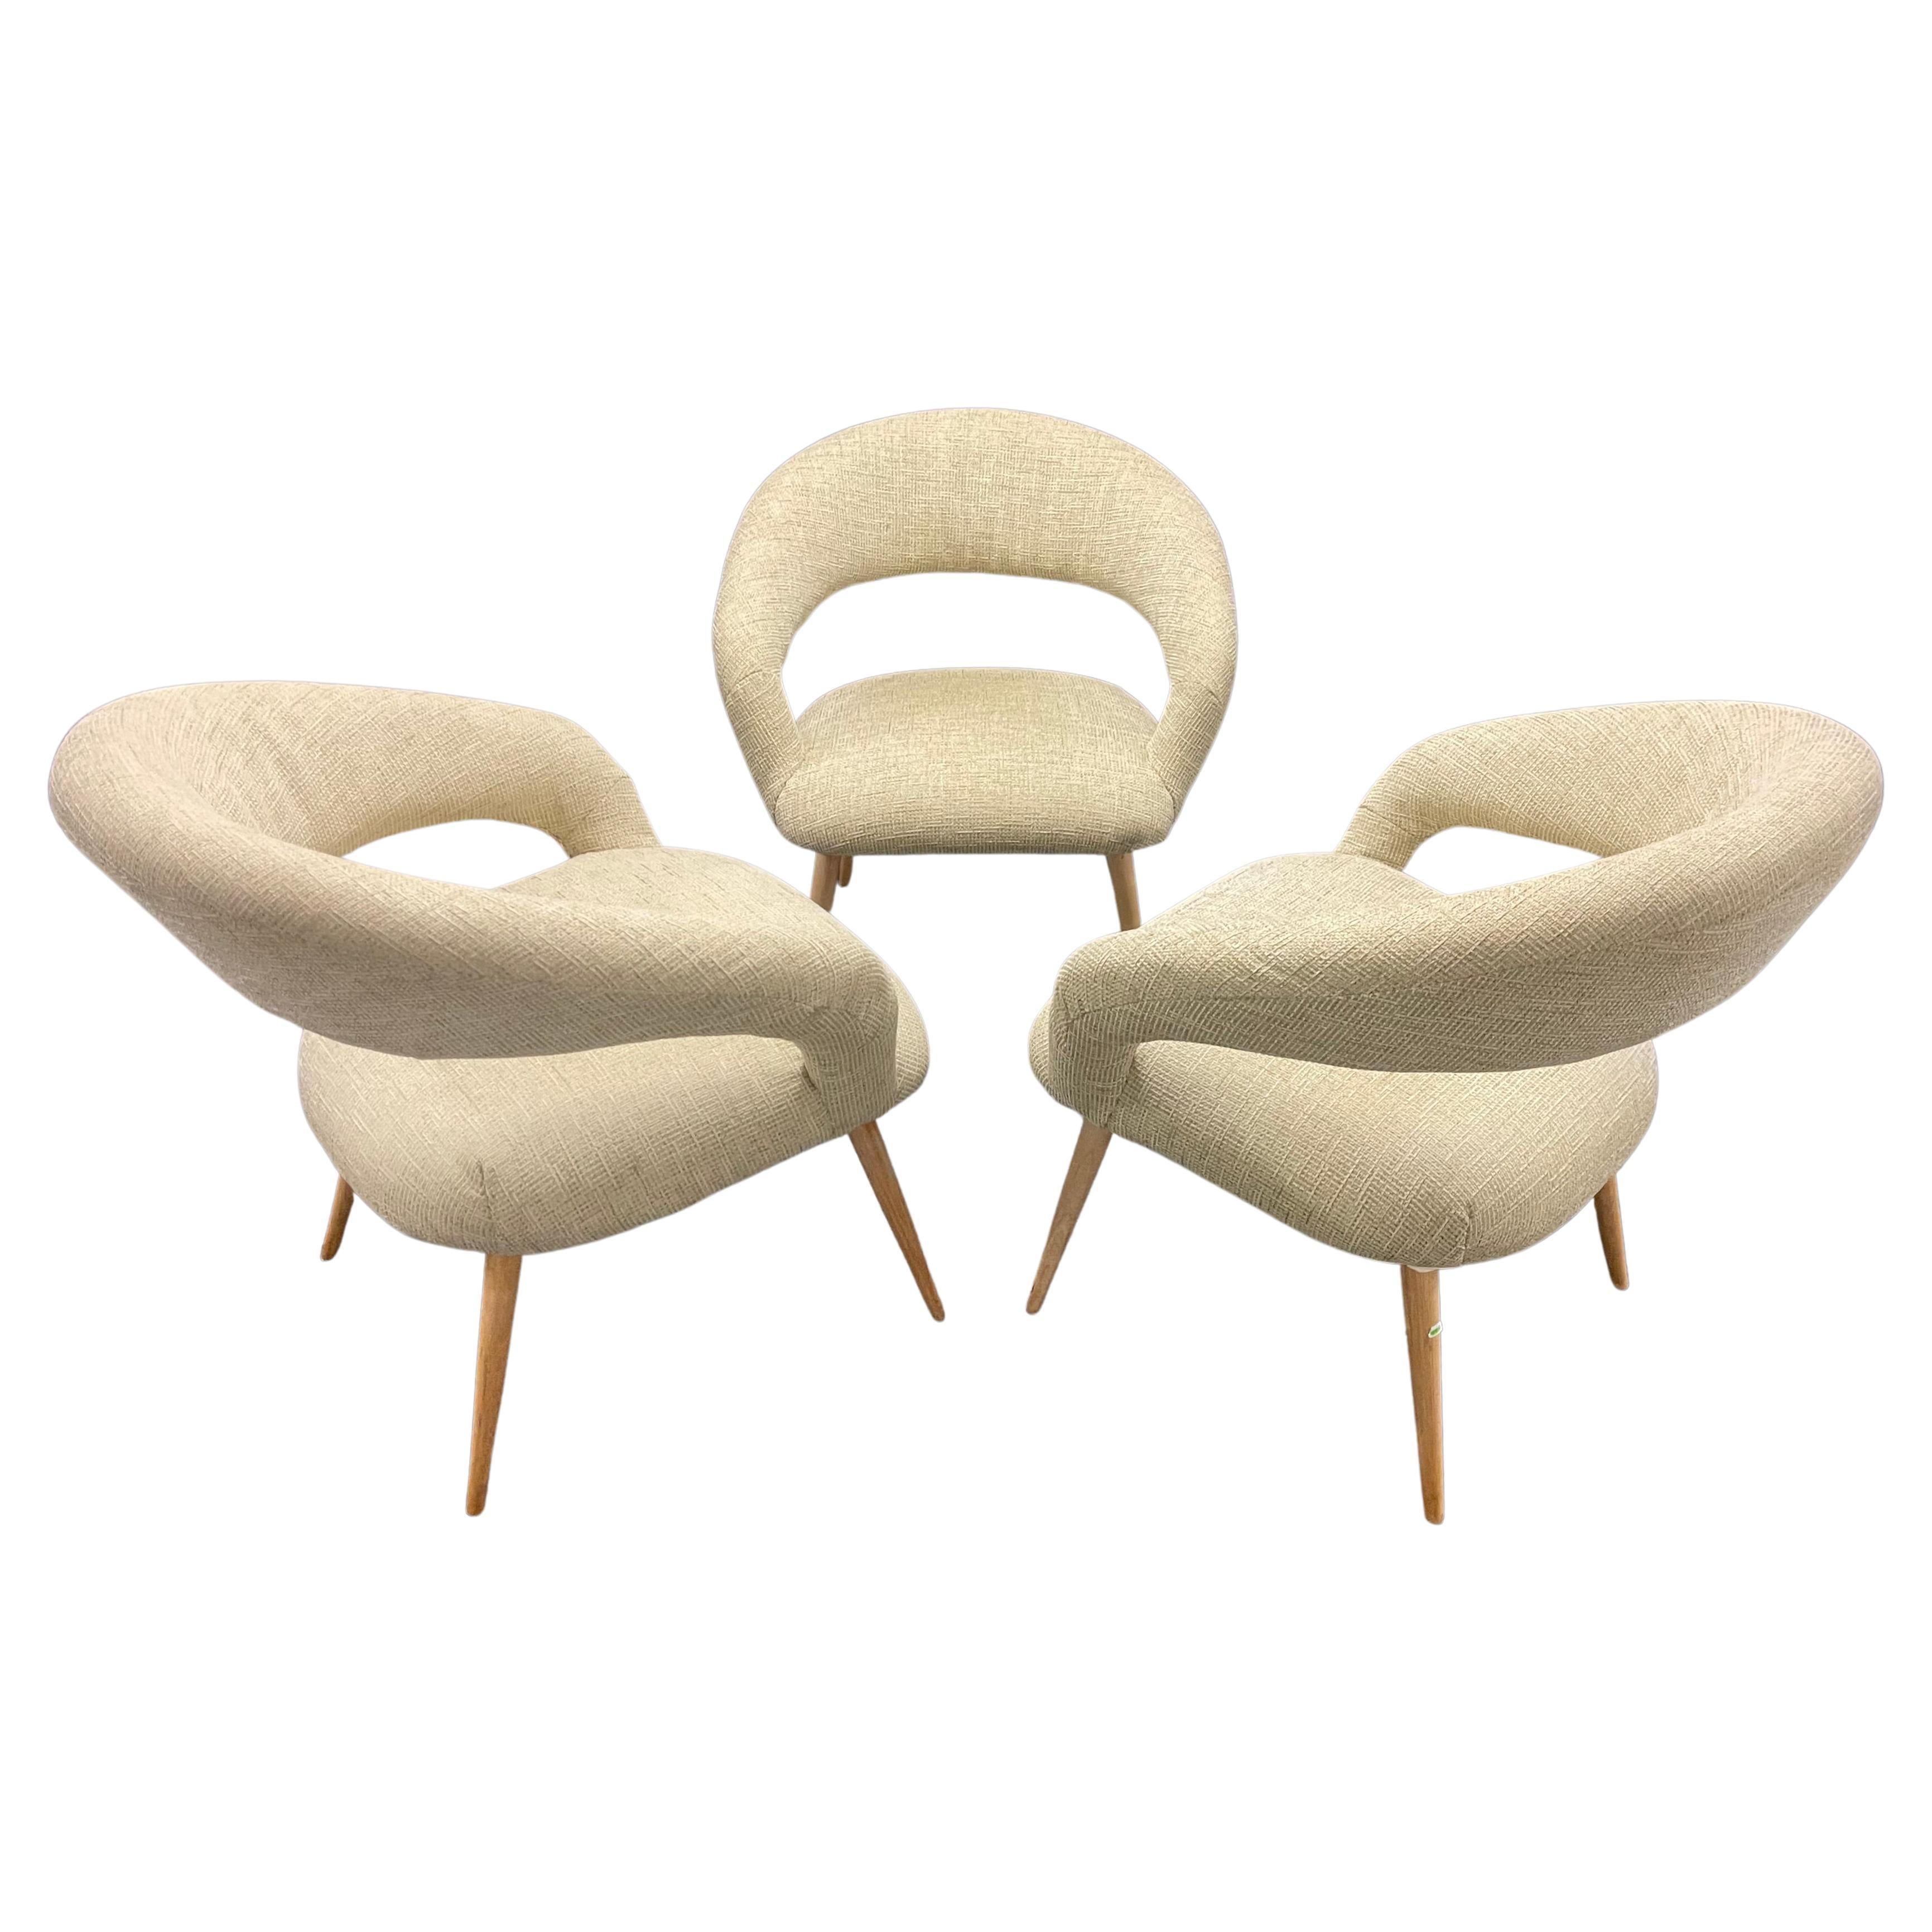 wonderful set of 3 elegant lounge chairs For Sale